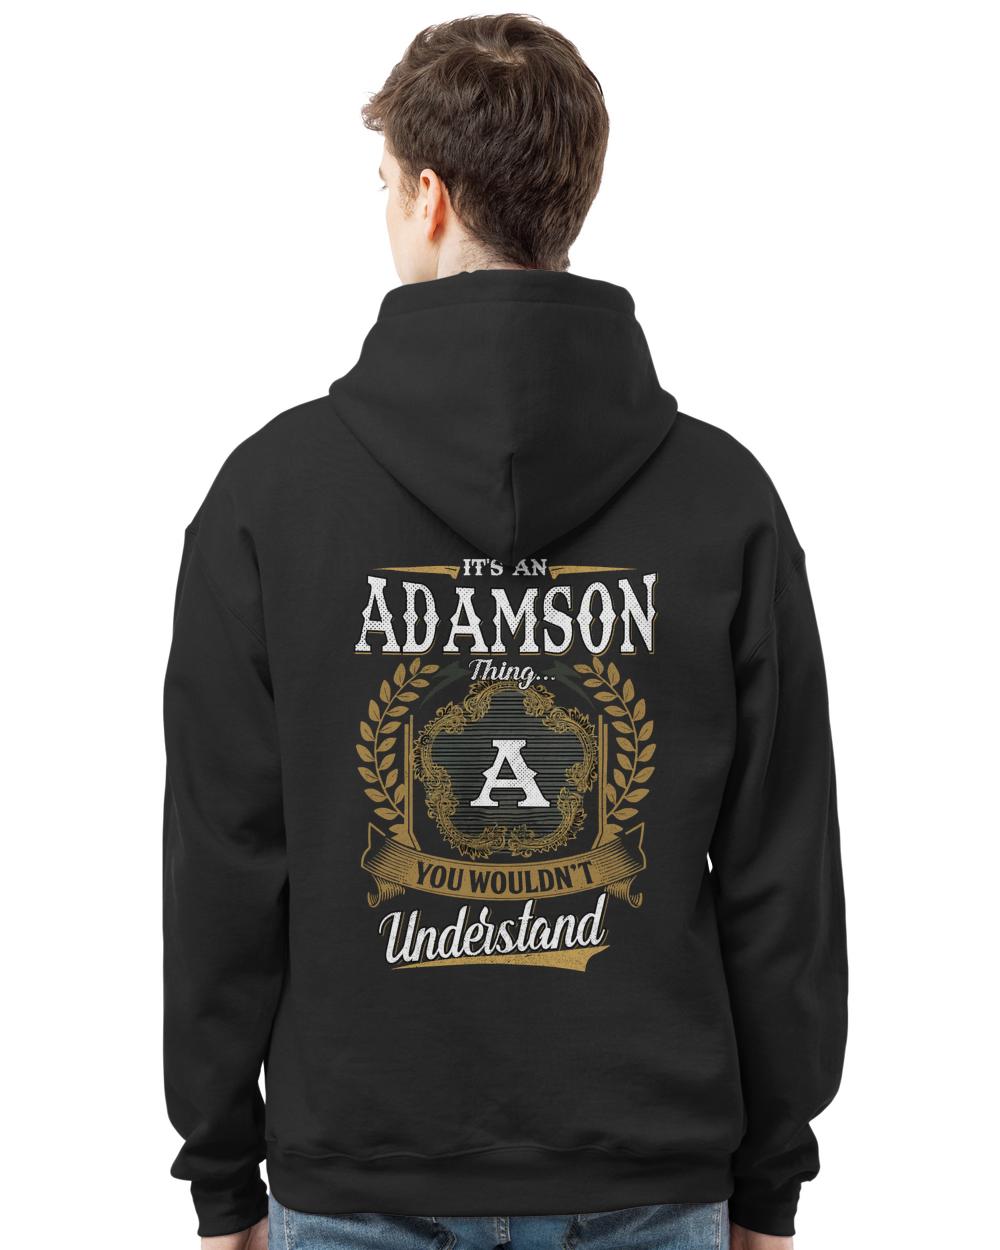 ADAMSON-13K-1-01